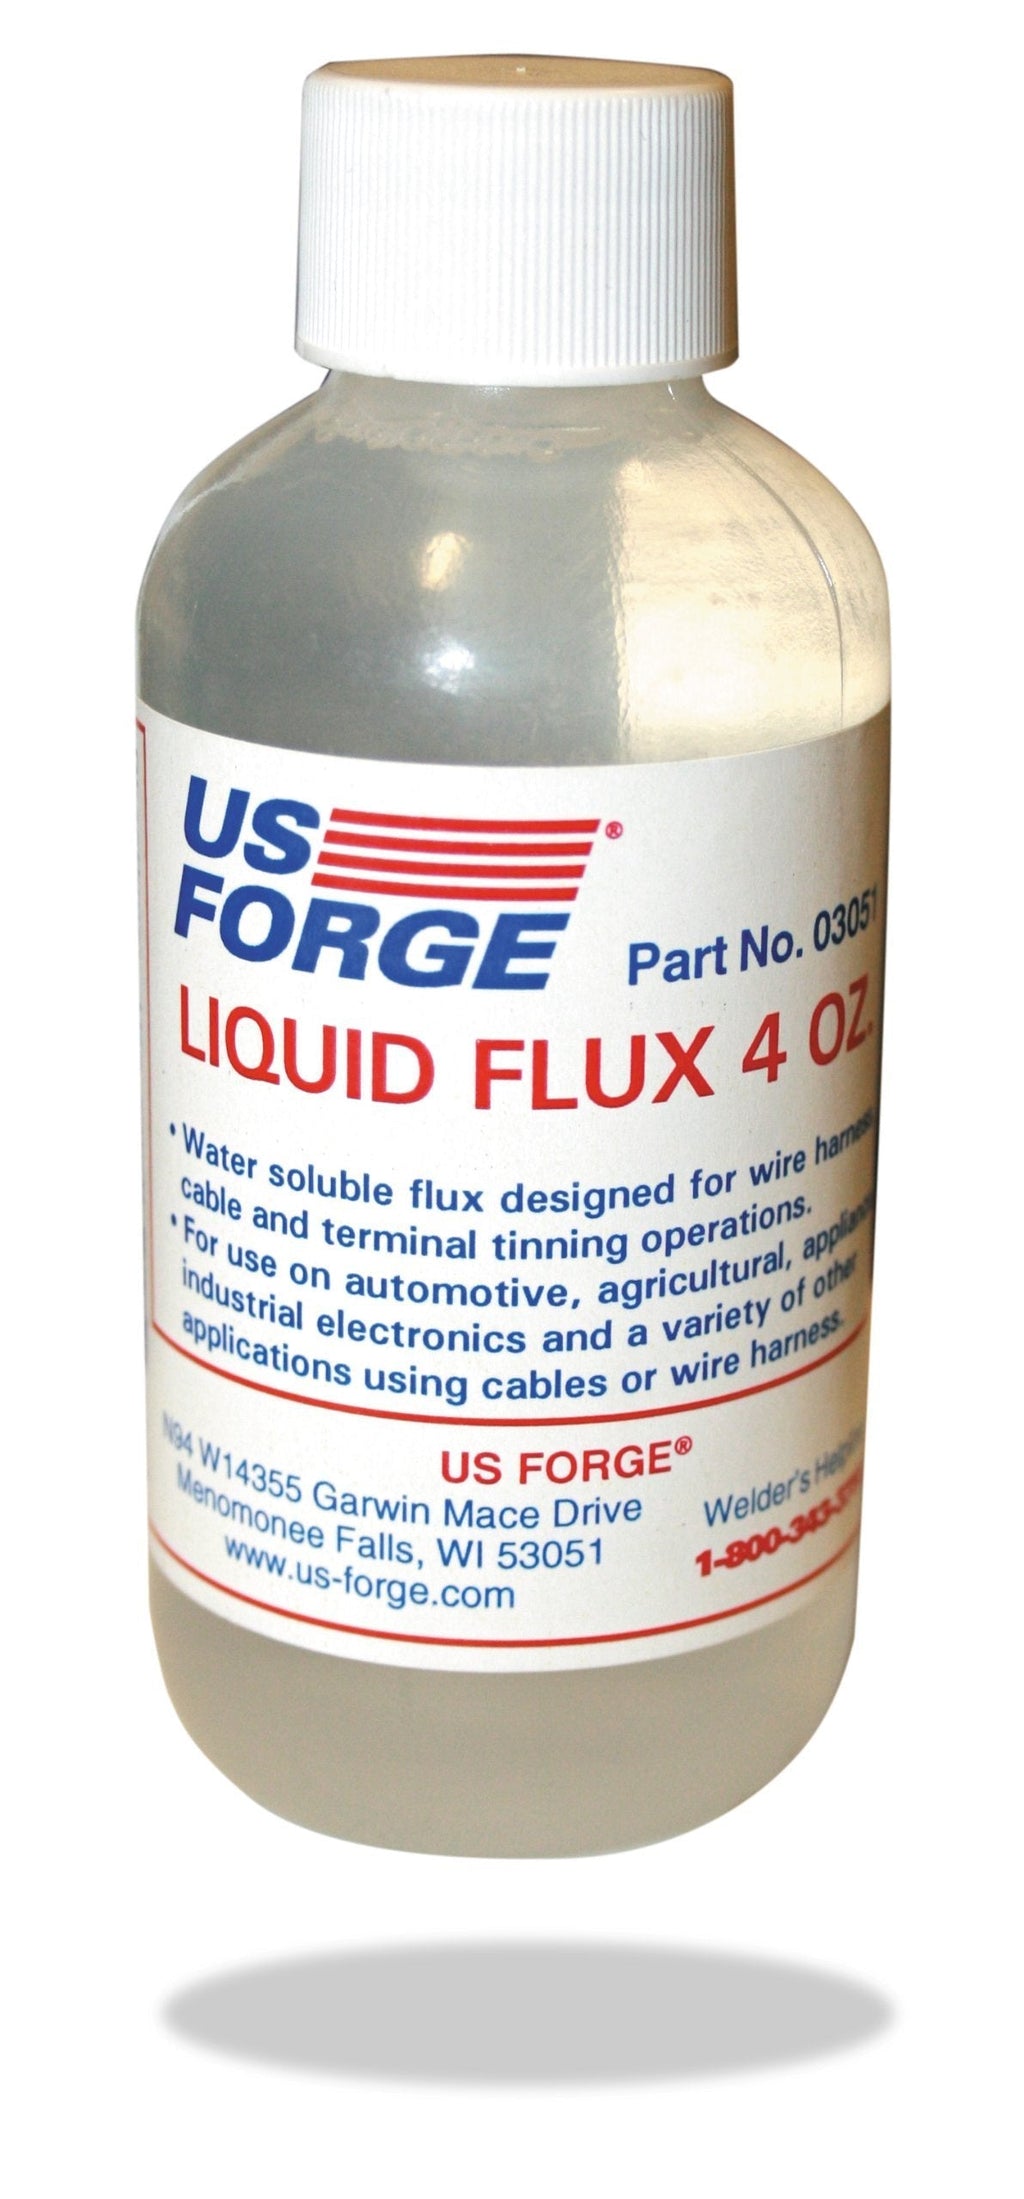  [AUSTRALIA] - US Forge 03051 4-Ounce Liquid Flux